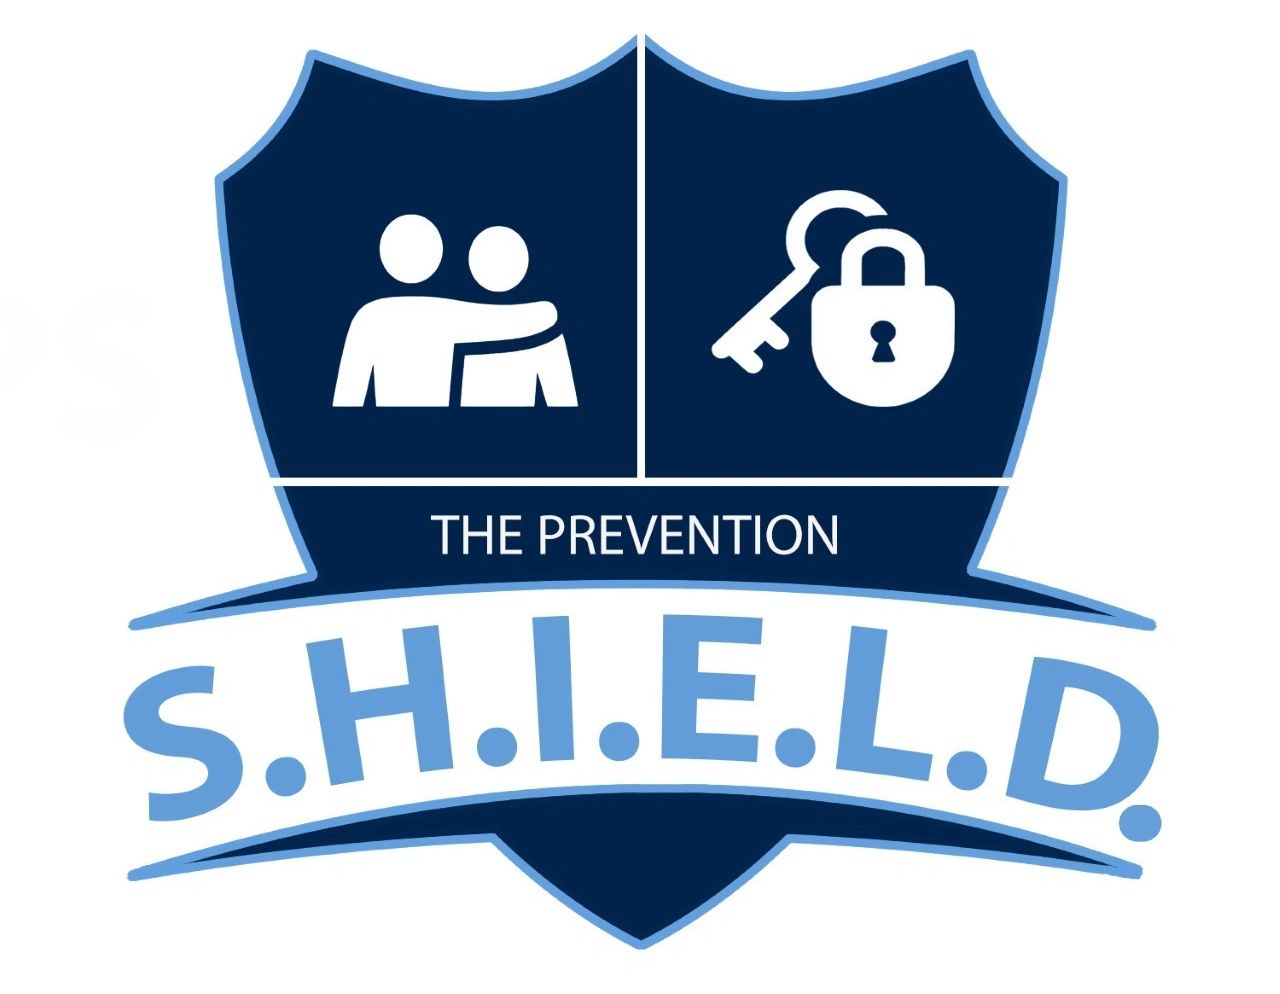 the shield wwe logo